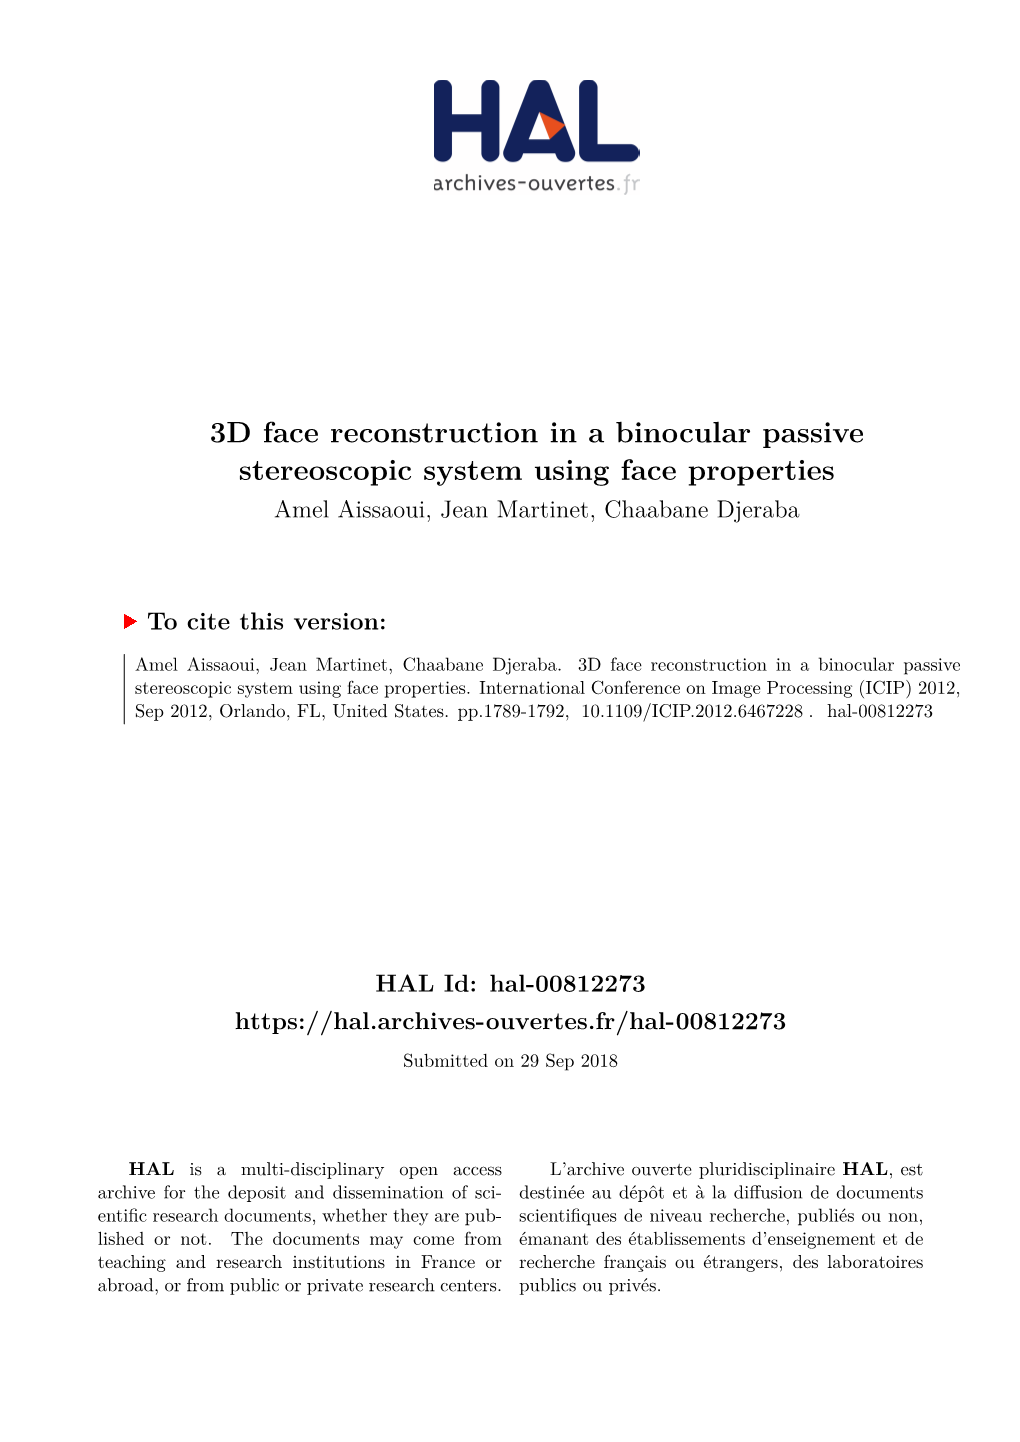 3D Face Reconstruction in a Binocular Passive Stereoscopic System Using Face Properties Amel Aissaoui, Jean Martinet, Chaabane Djeraba